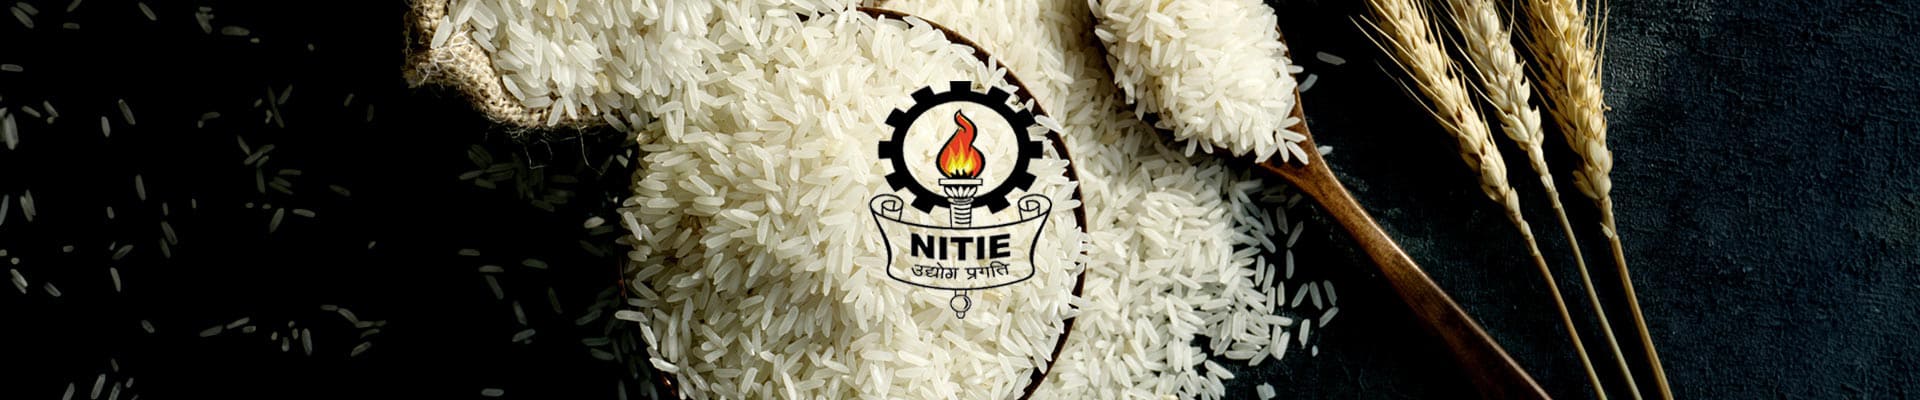 NITIE logo over rice